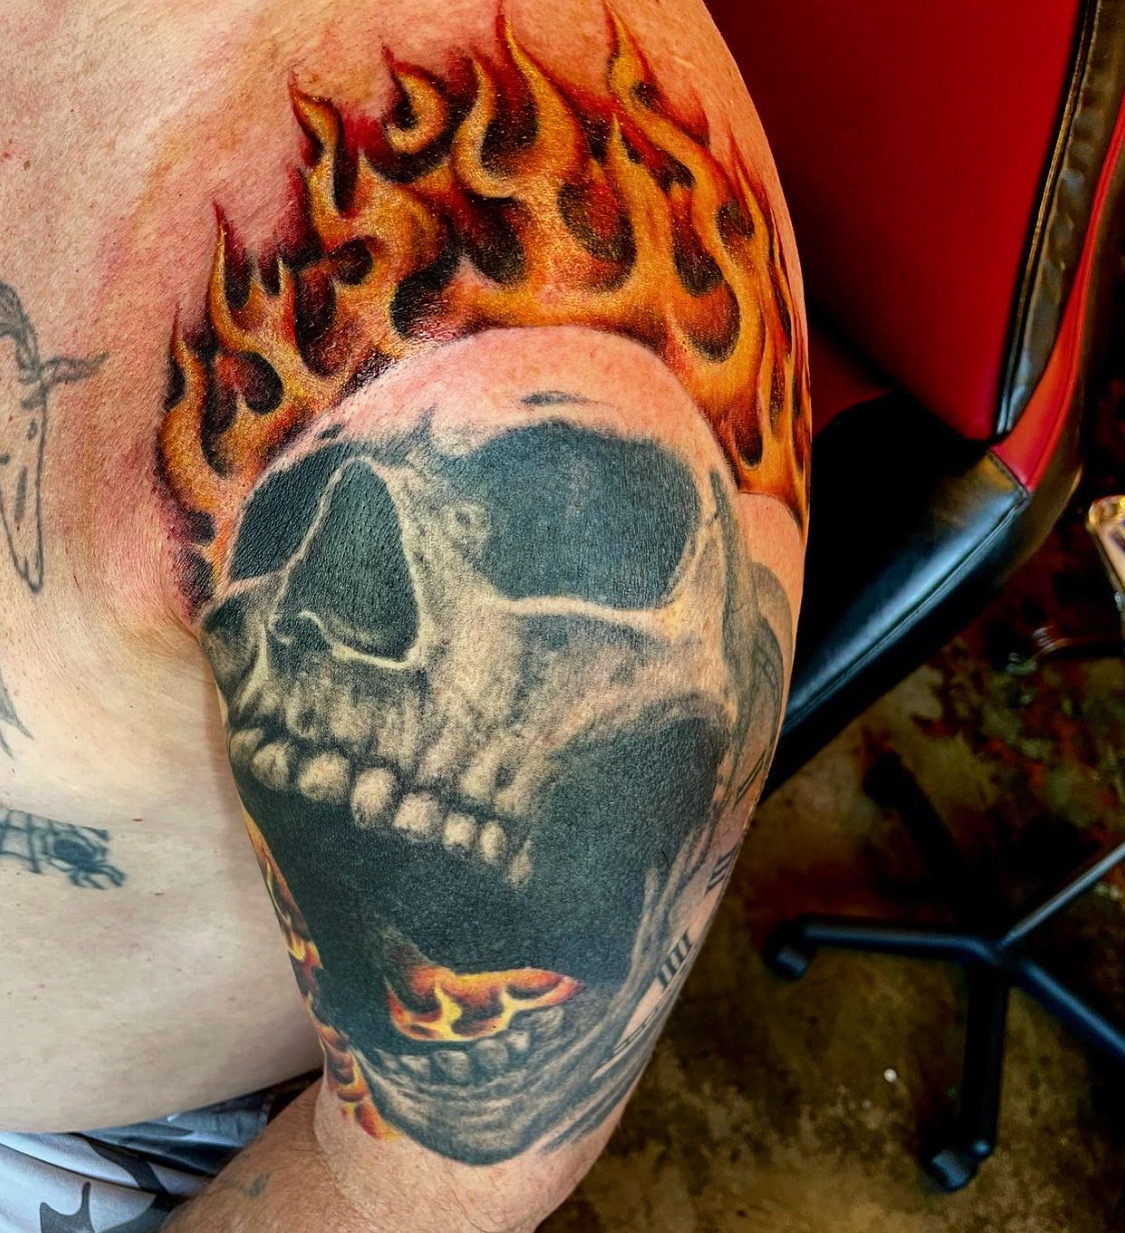 tattoo of a fiery skull from top tattoo artists in dallas